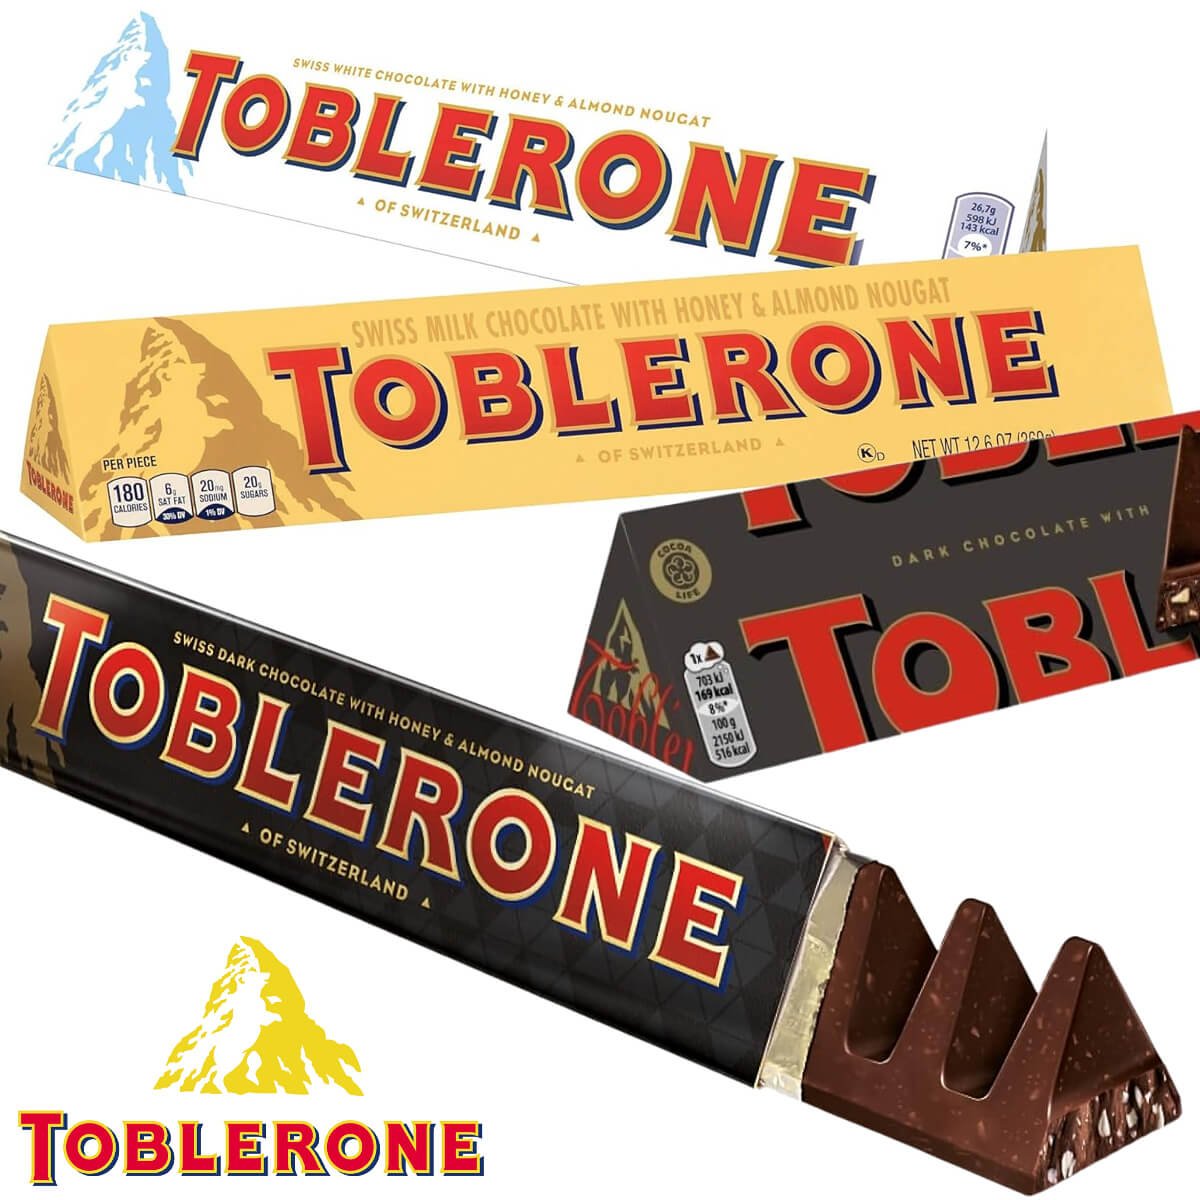 Toblerone: A Peak into Swiss Chocolate Delight